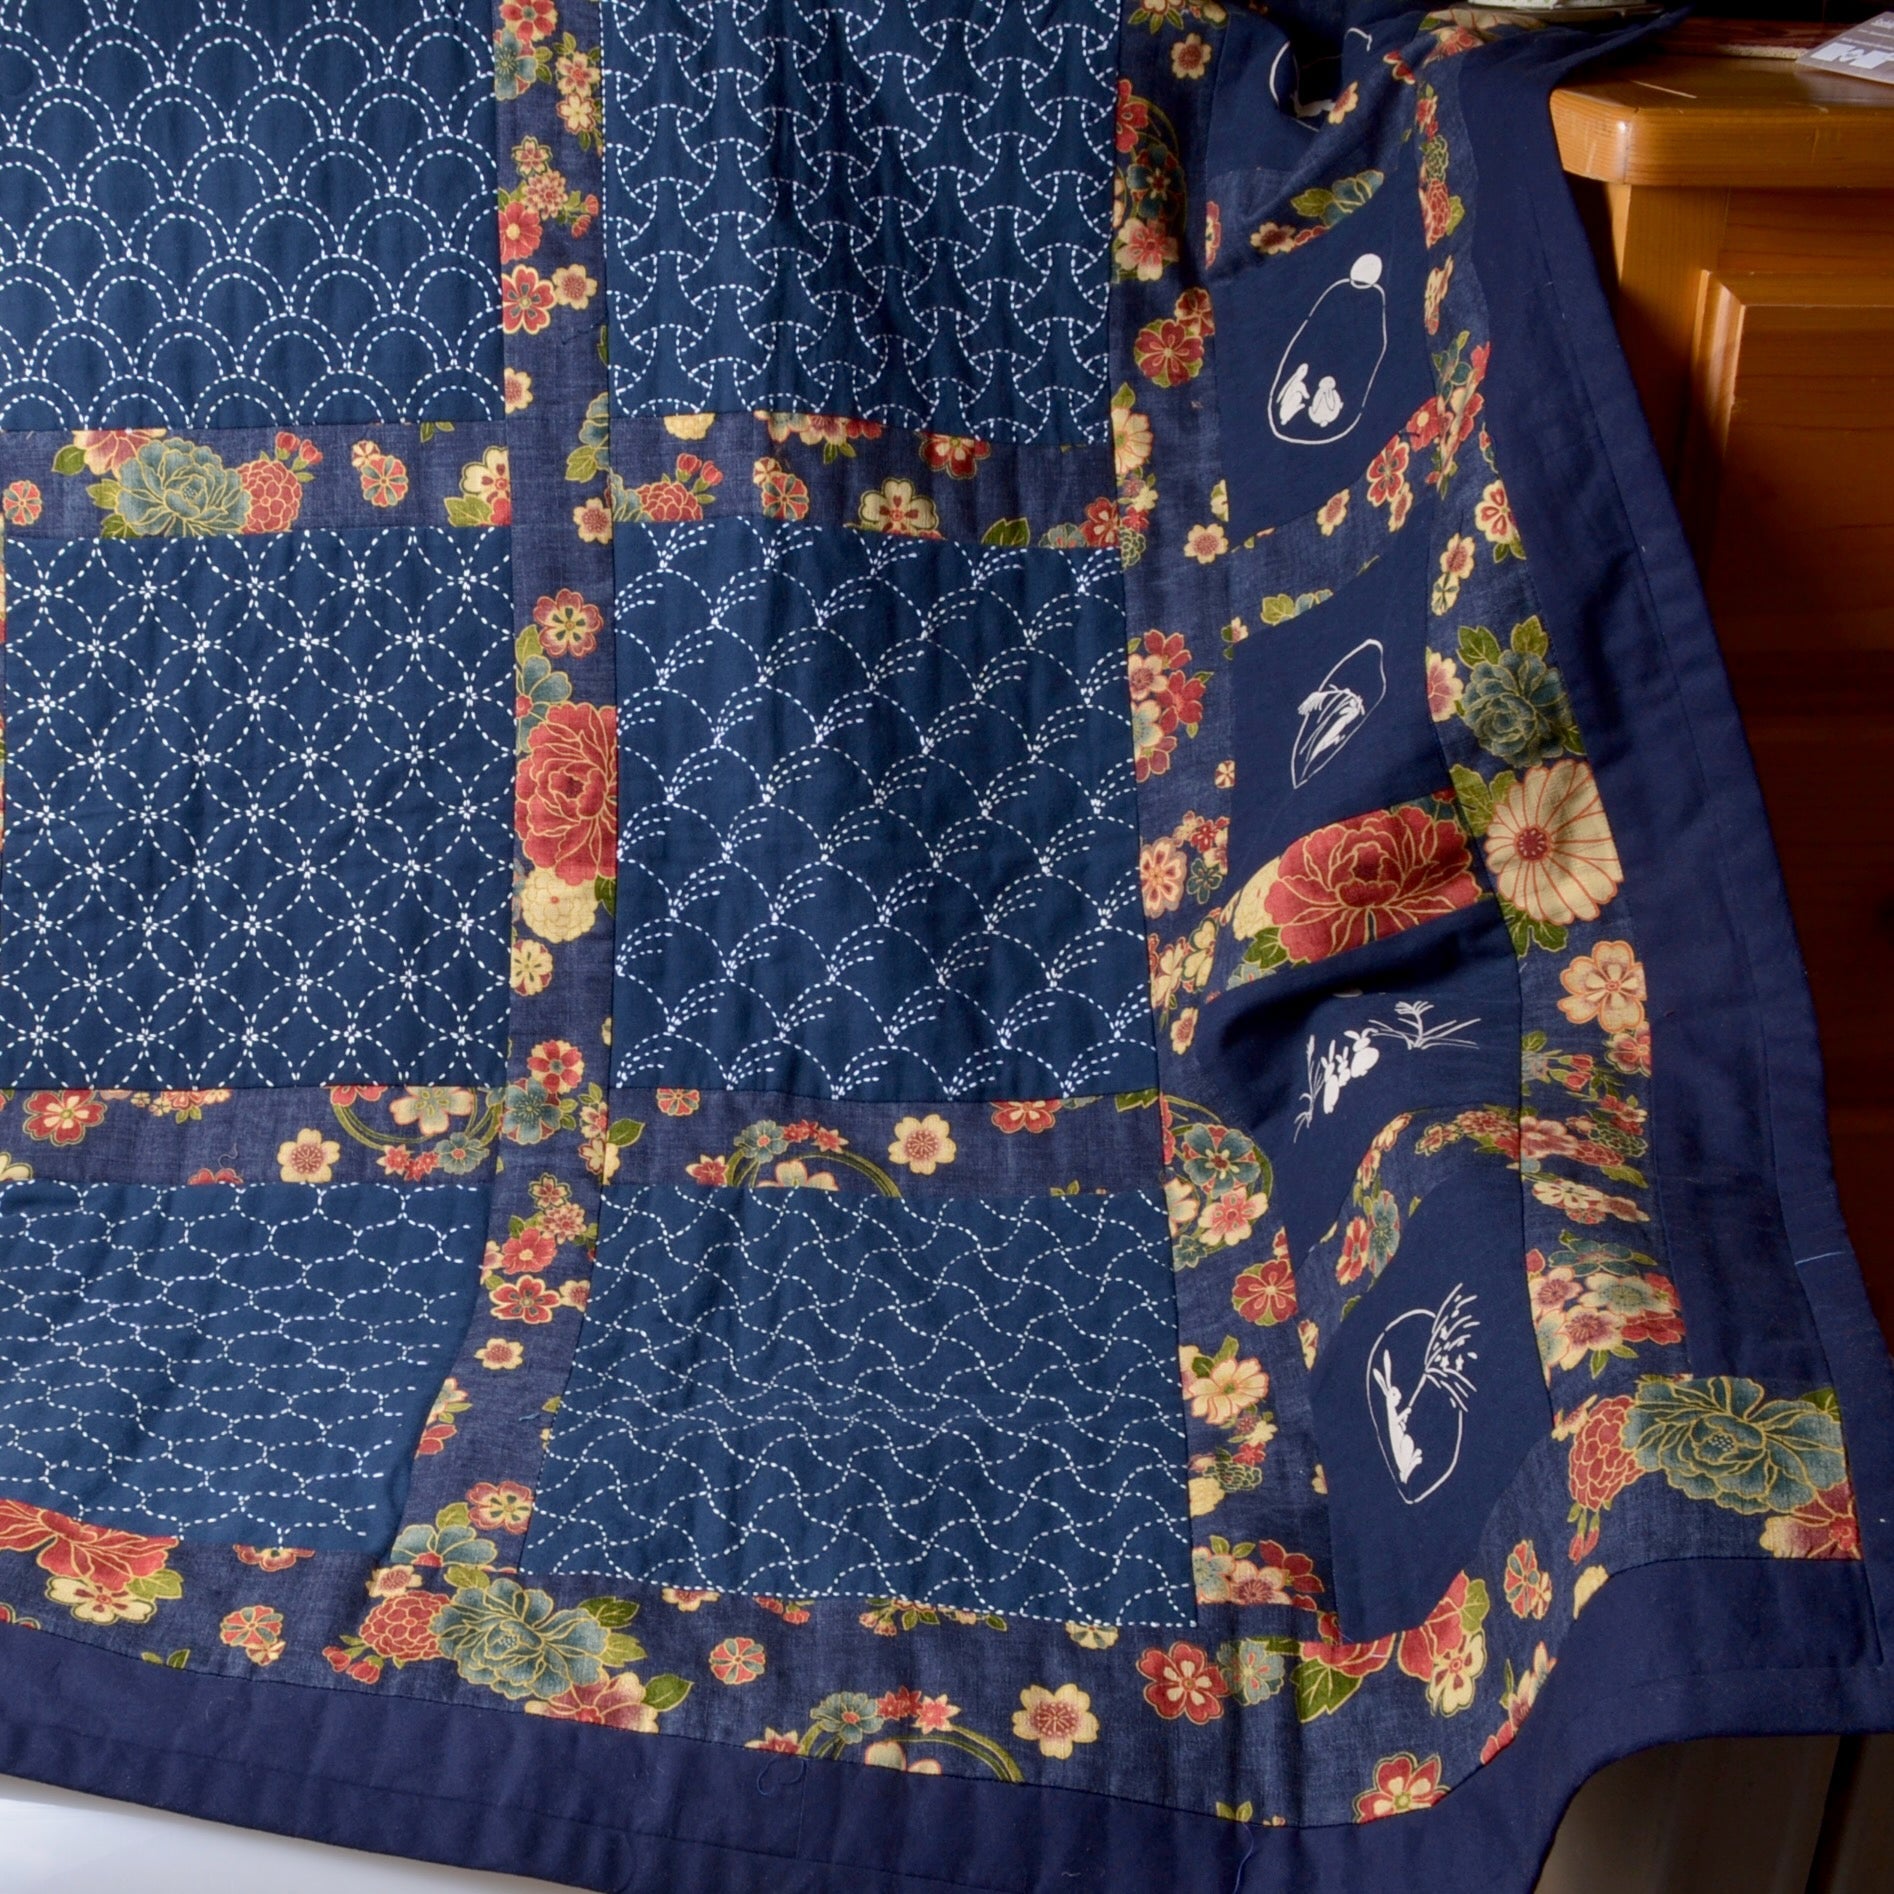 Sashiko quilt made with Olympus traditional sashiko sample blocks